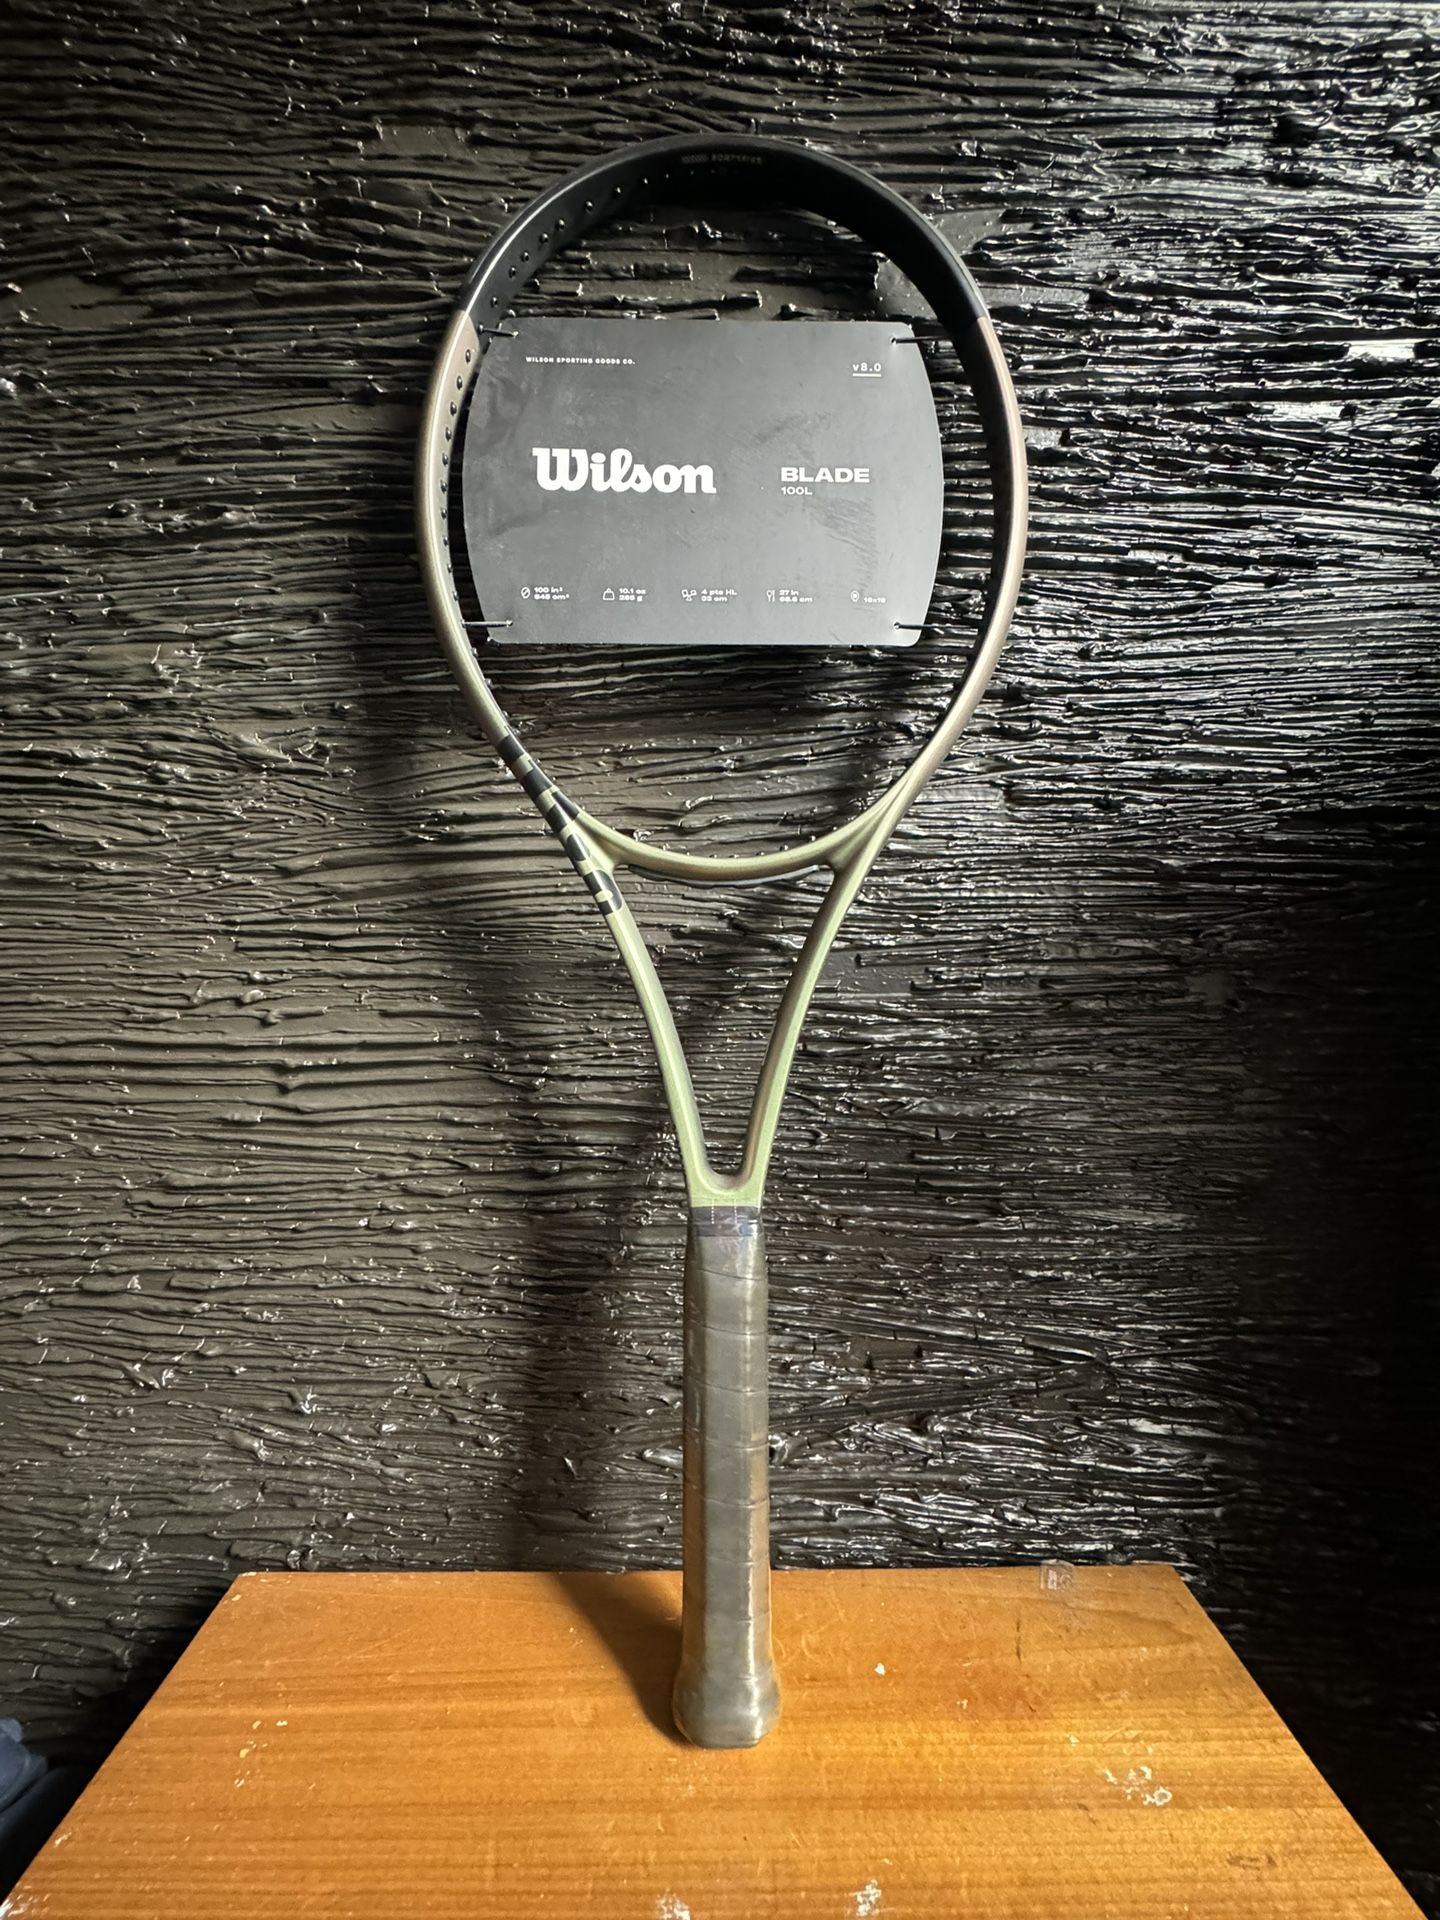 5 NEW Head/Wilson Tennis Rackets + Head Bag